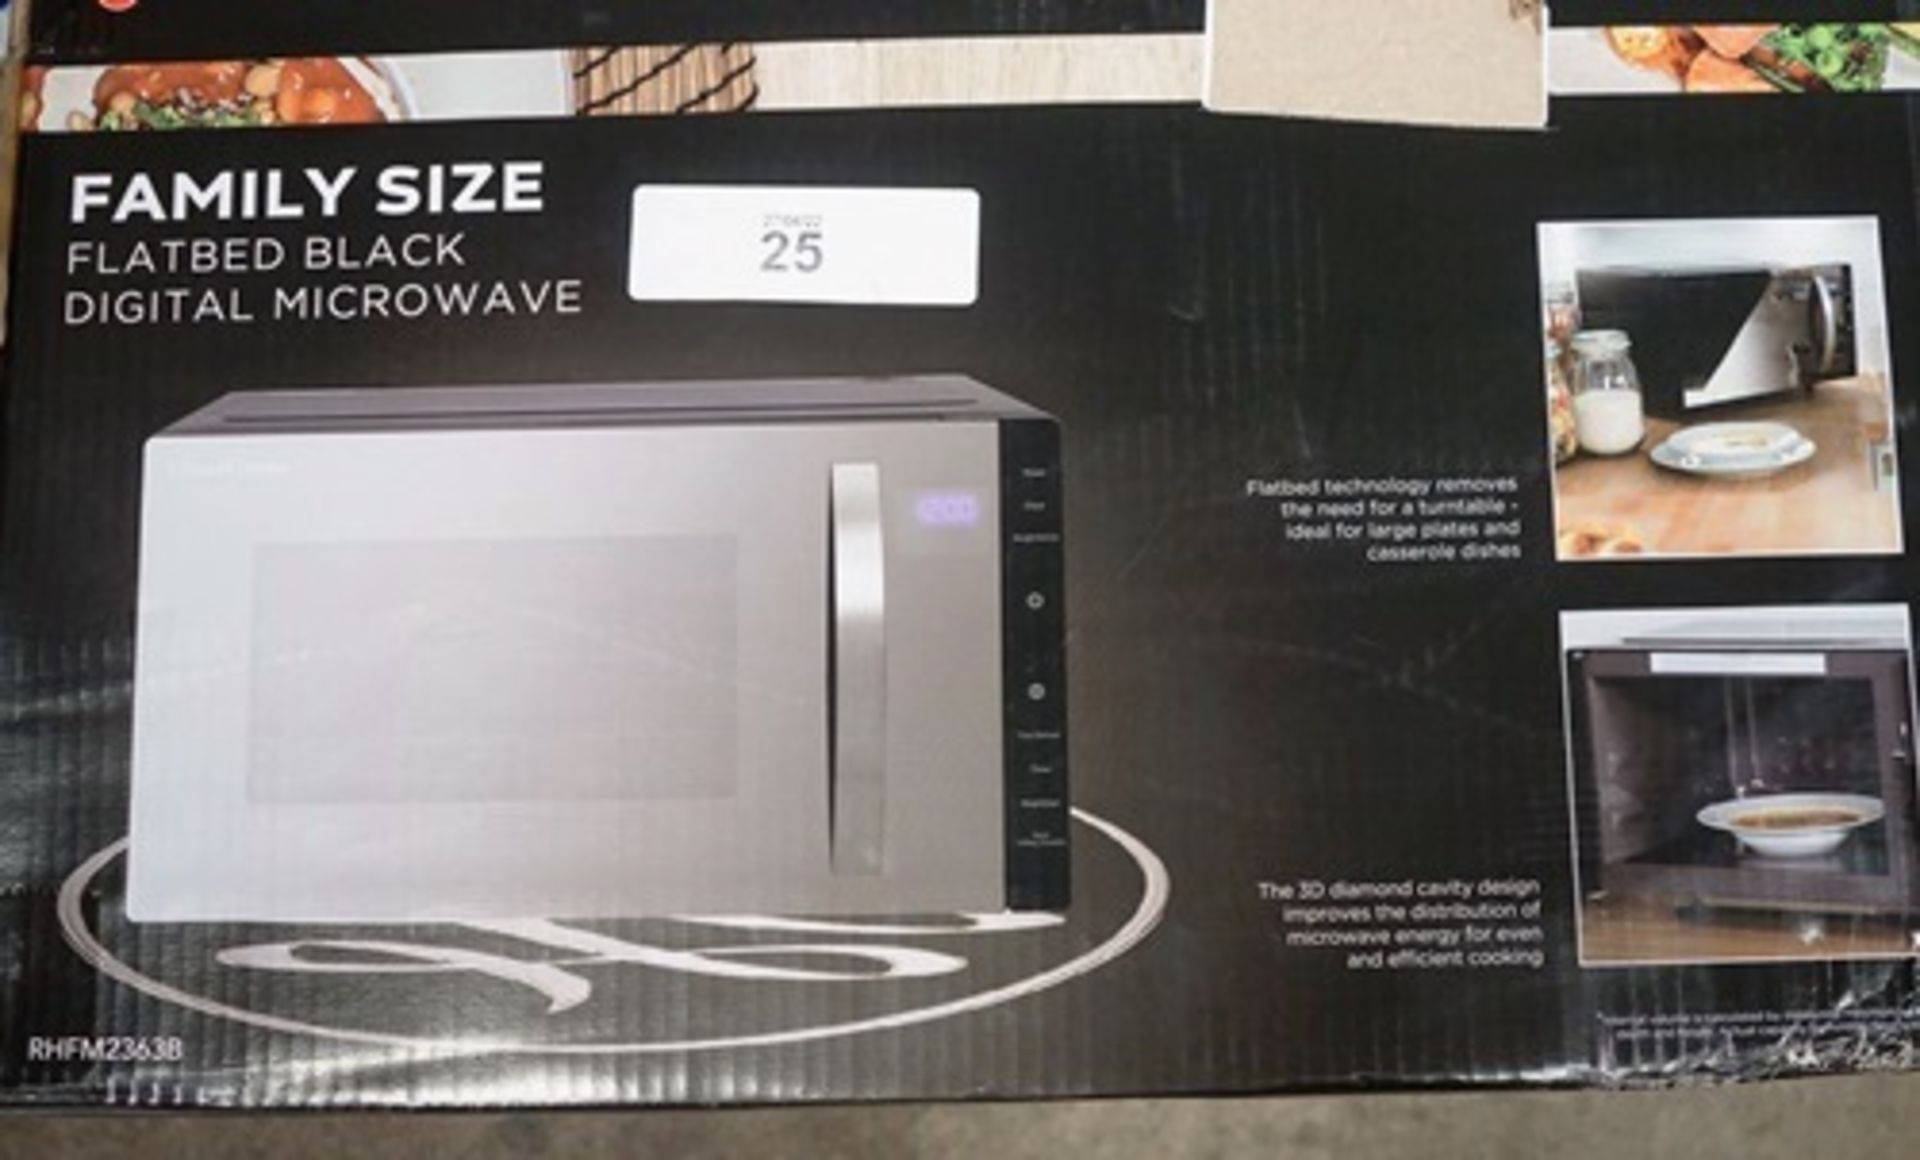 1 x Russell Hobbs flatbed 800W digital microwave, model 117167 - Sealed new in box (ES2)